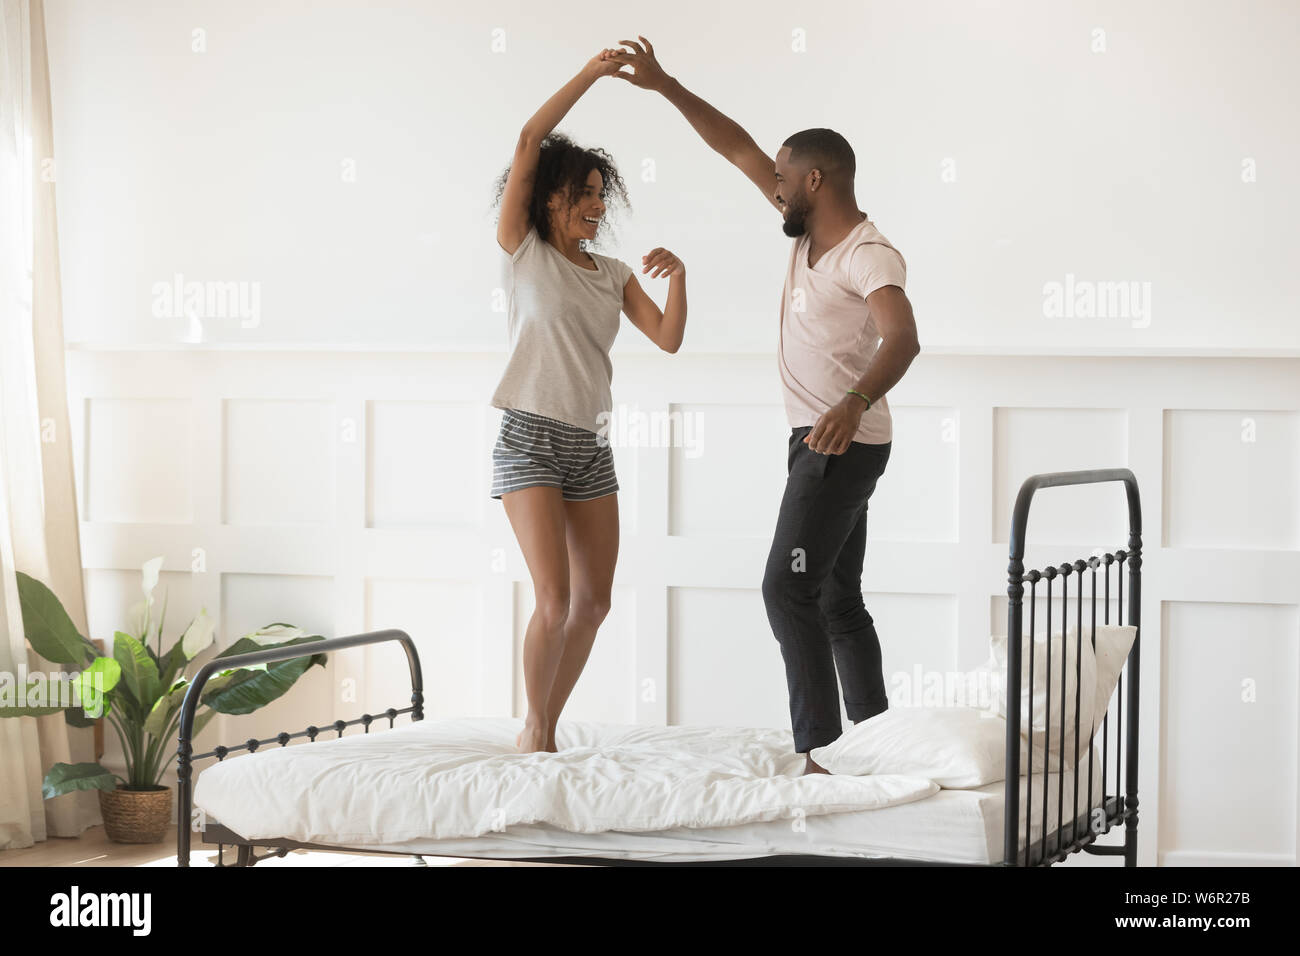 Romantique jeune couple wearing pajamas dancing on bed Banque D'Images